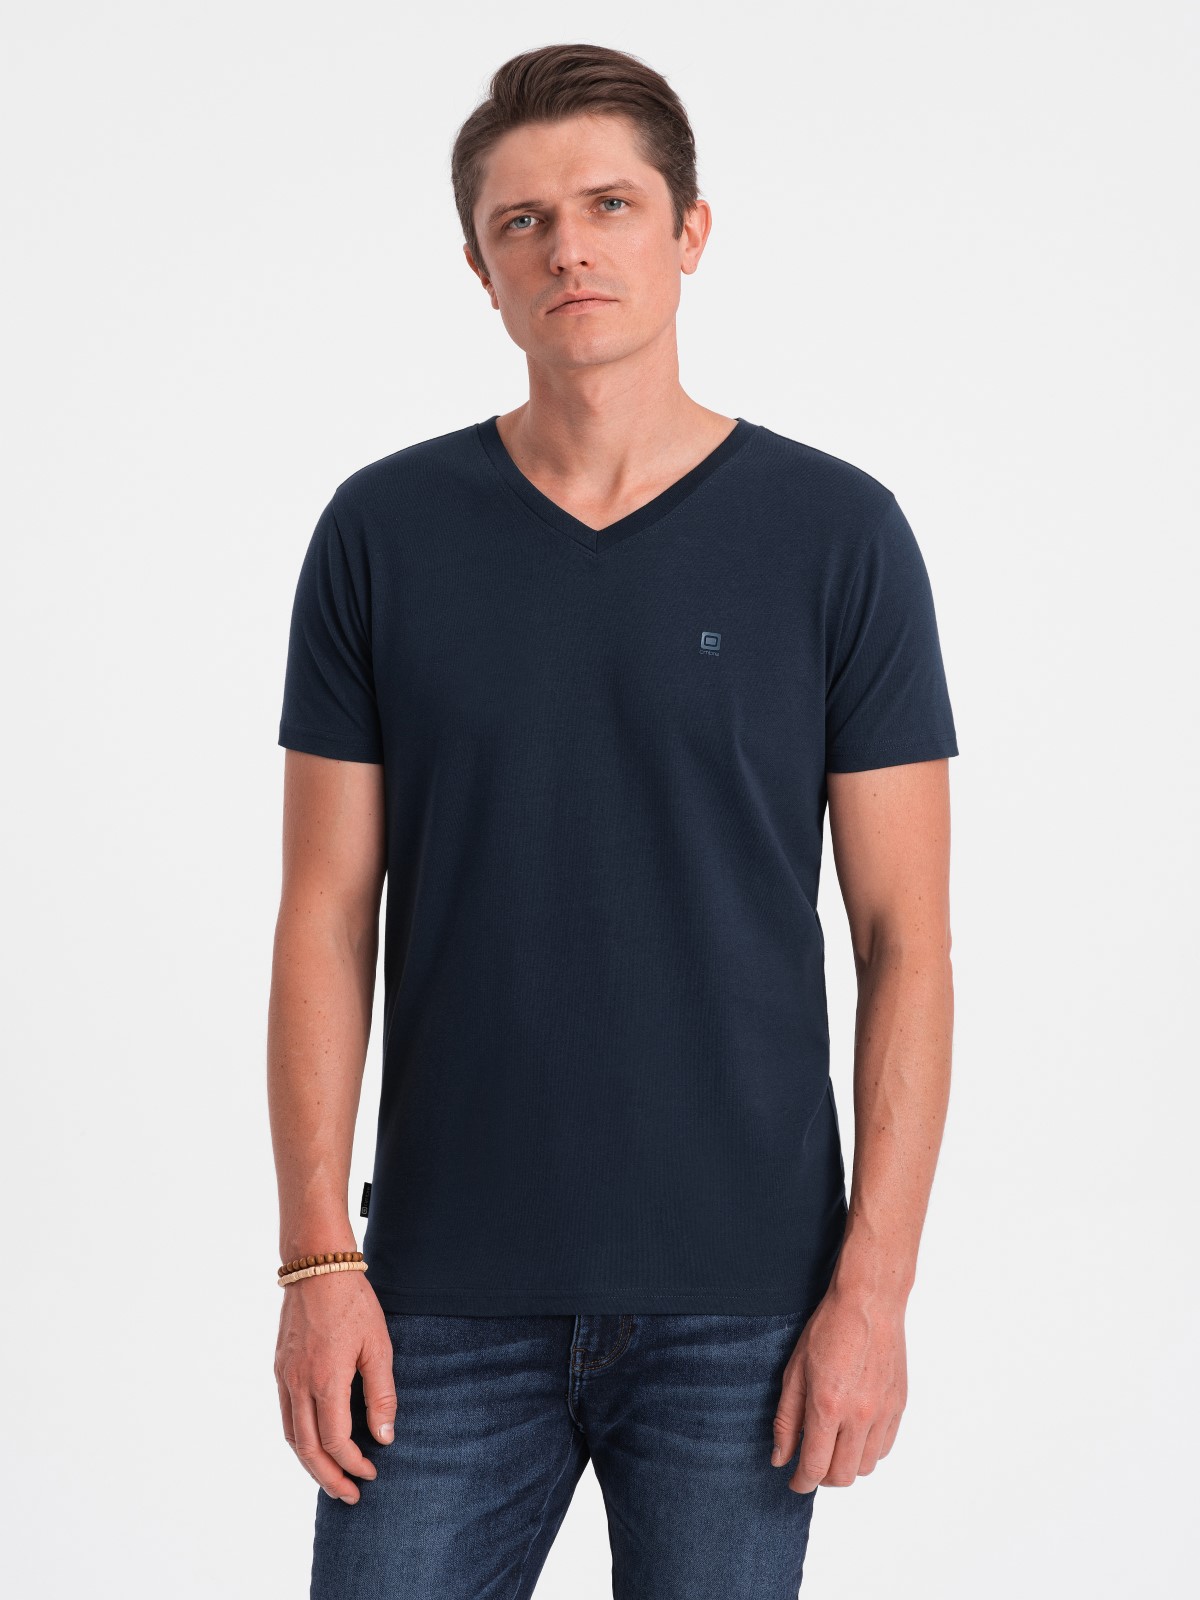 Ombre Men's V-NECK T-shirt with elastane - navy blue